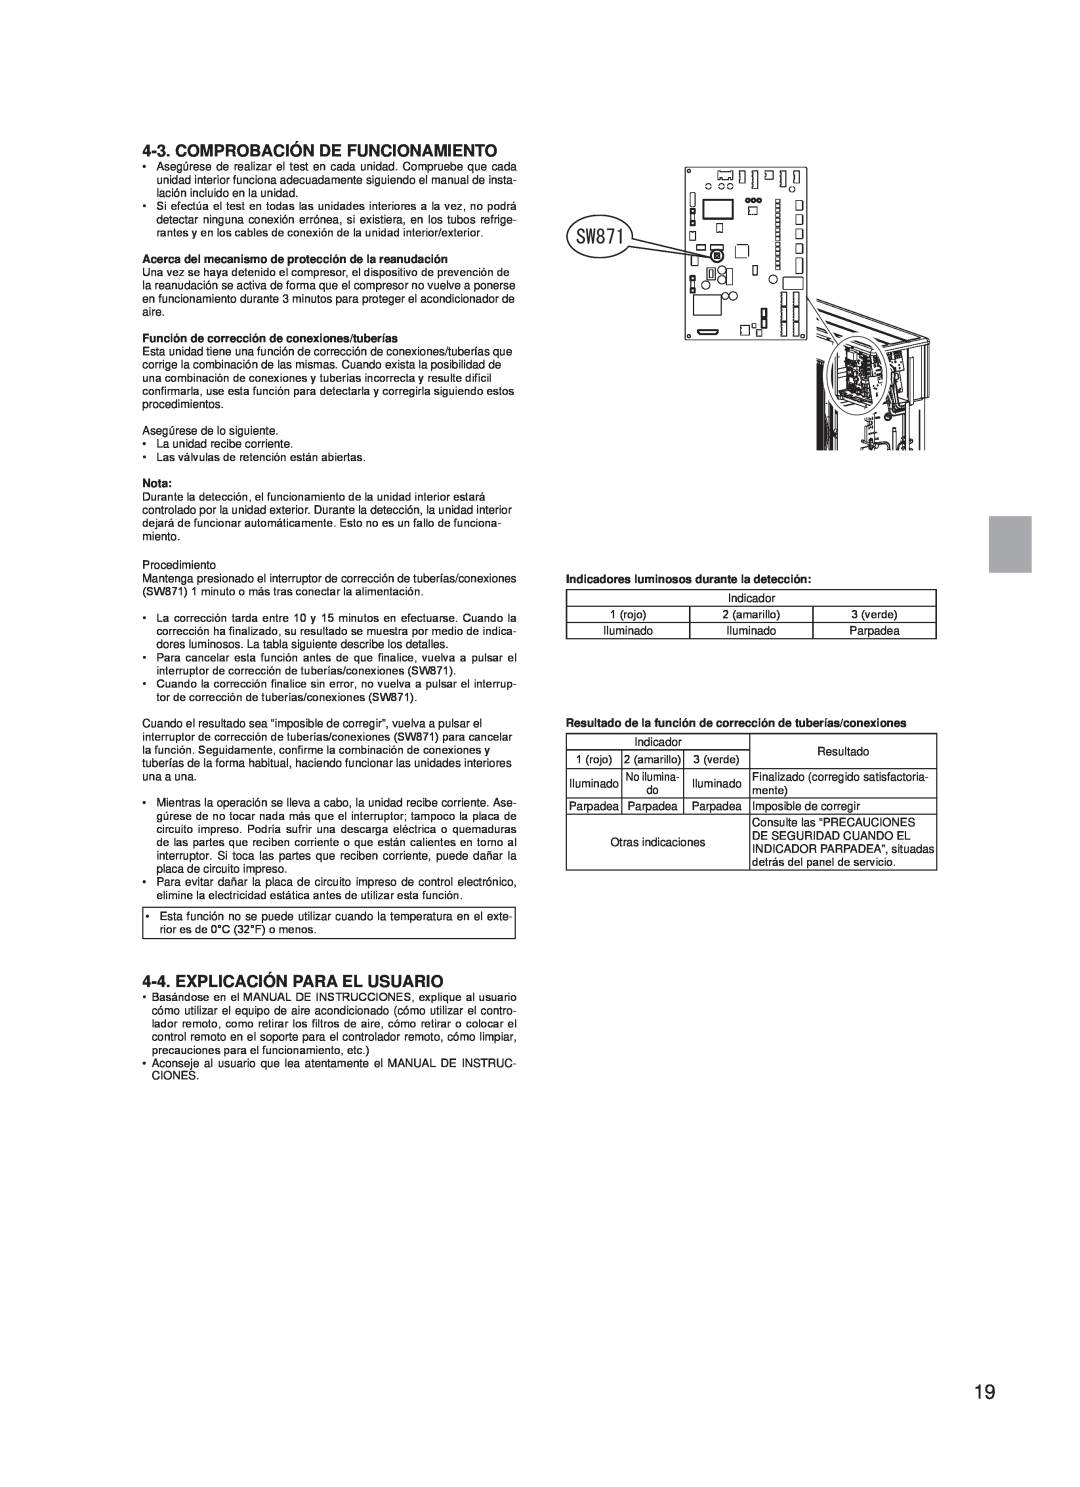 Troy-Bilt MXZ-4A36NA, MXZ-3A30NA installation manual Comprobación De Funcionamiento, Explicación Para El Usuario, Nota 